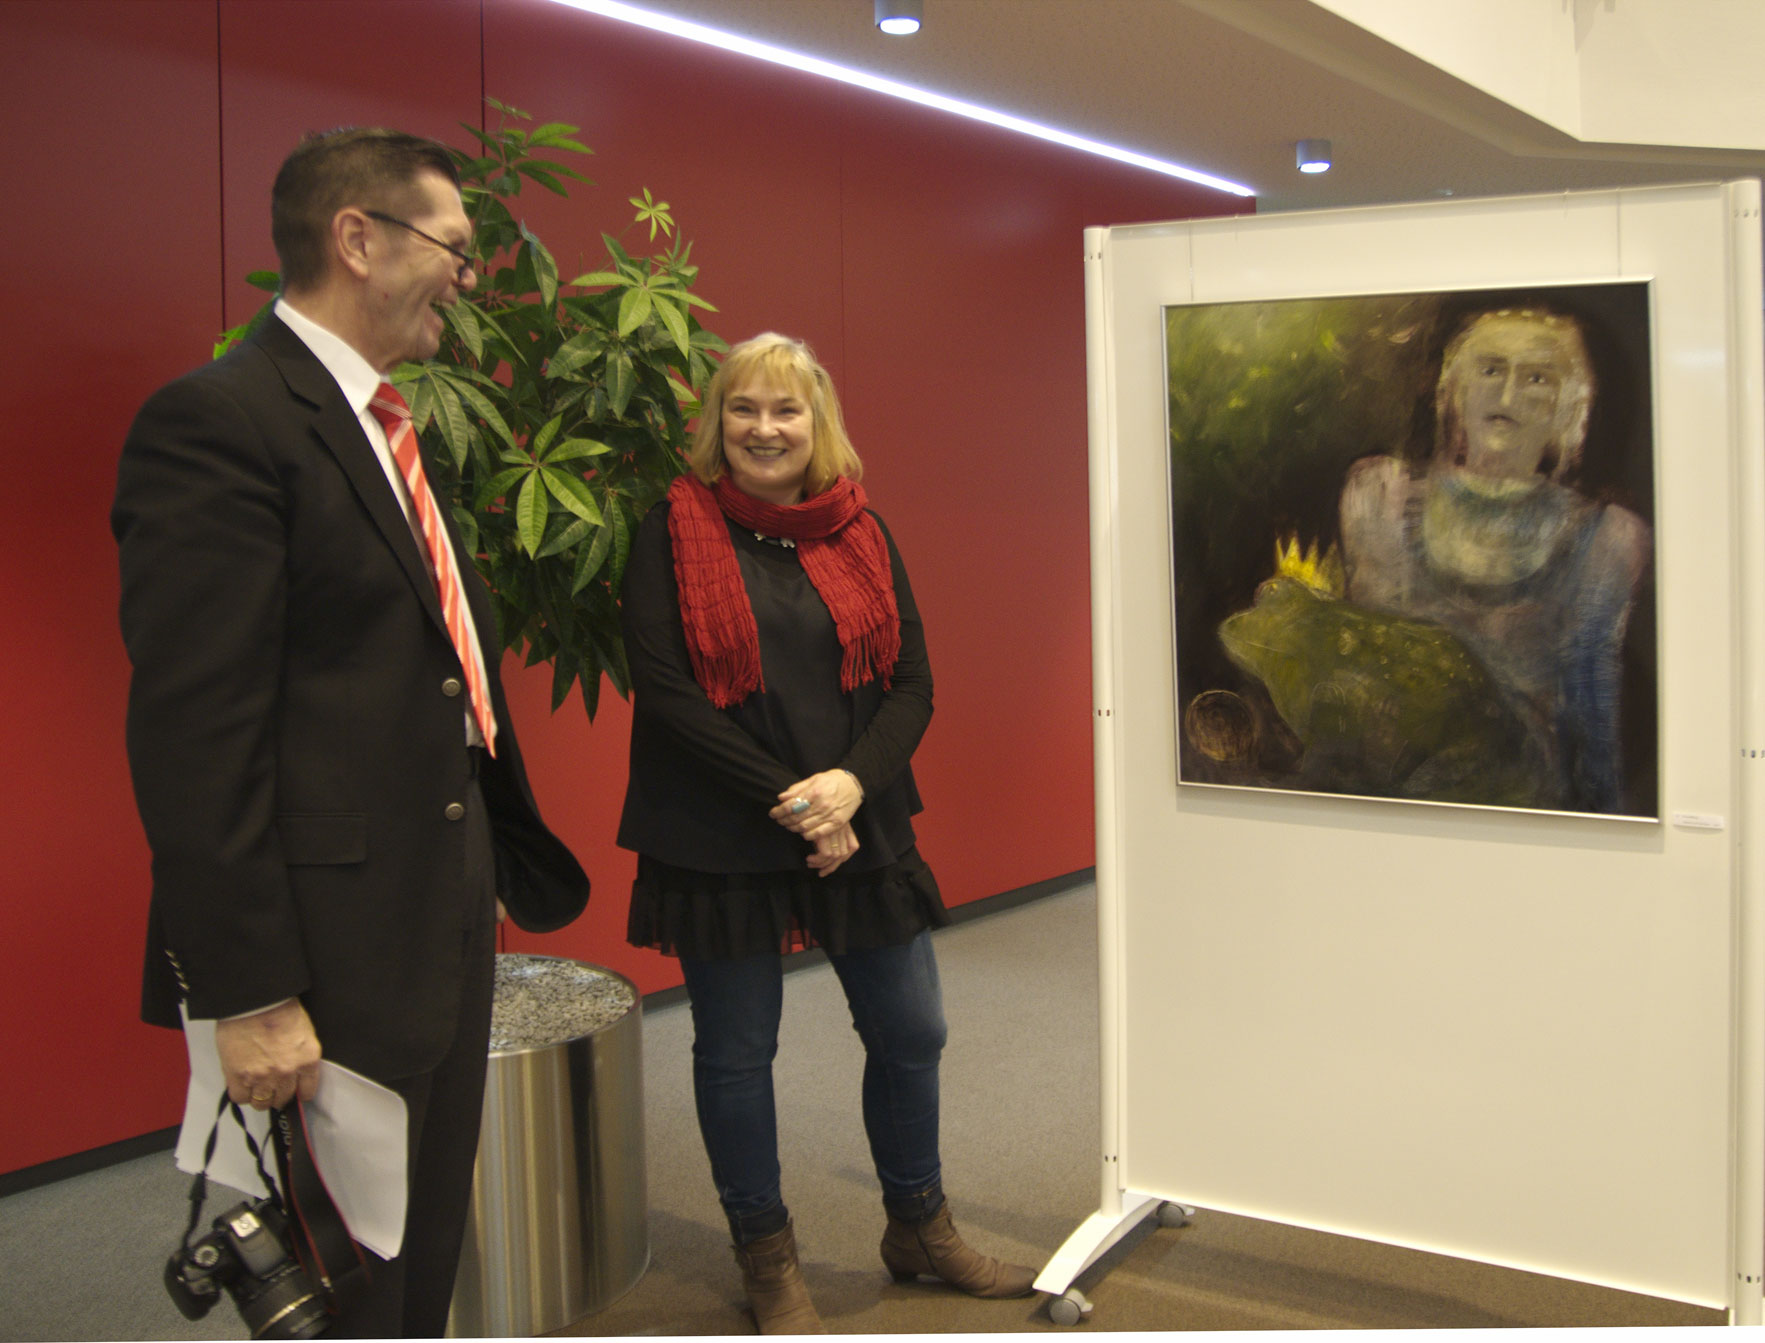 v.l. Johannes Dennda [Sparkasse Ennepetal-Breckerfeld] und Marlies Blauth vor dem Gemälde "Froschkönig"